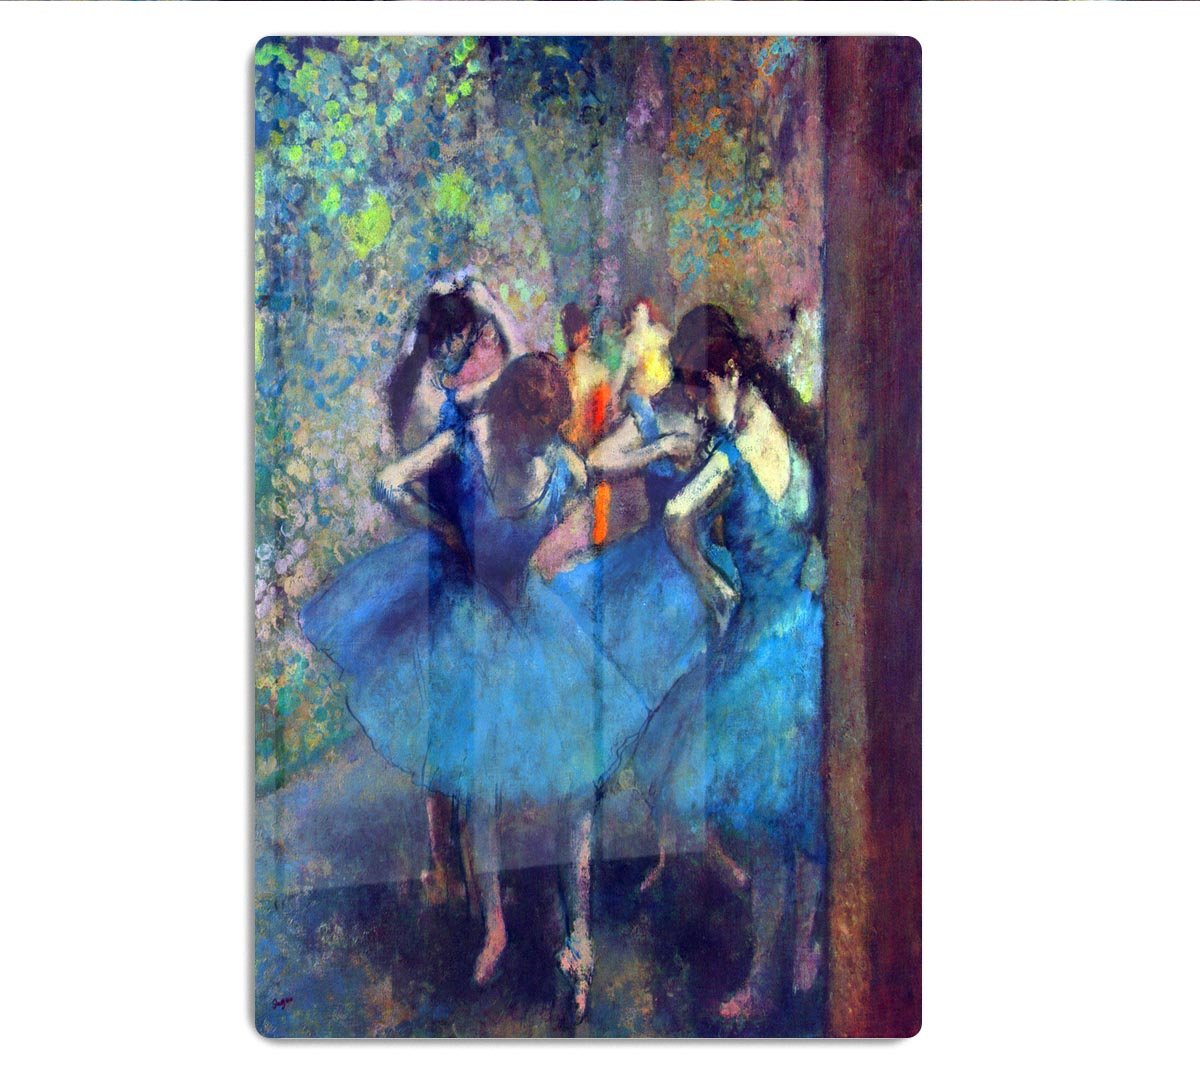 Dancers 1 by Degas HD Metal Print - Canvas Art Rocks - 1